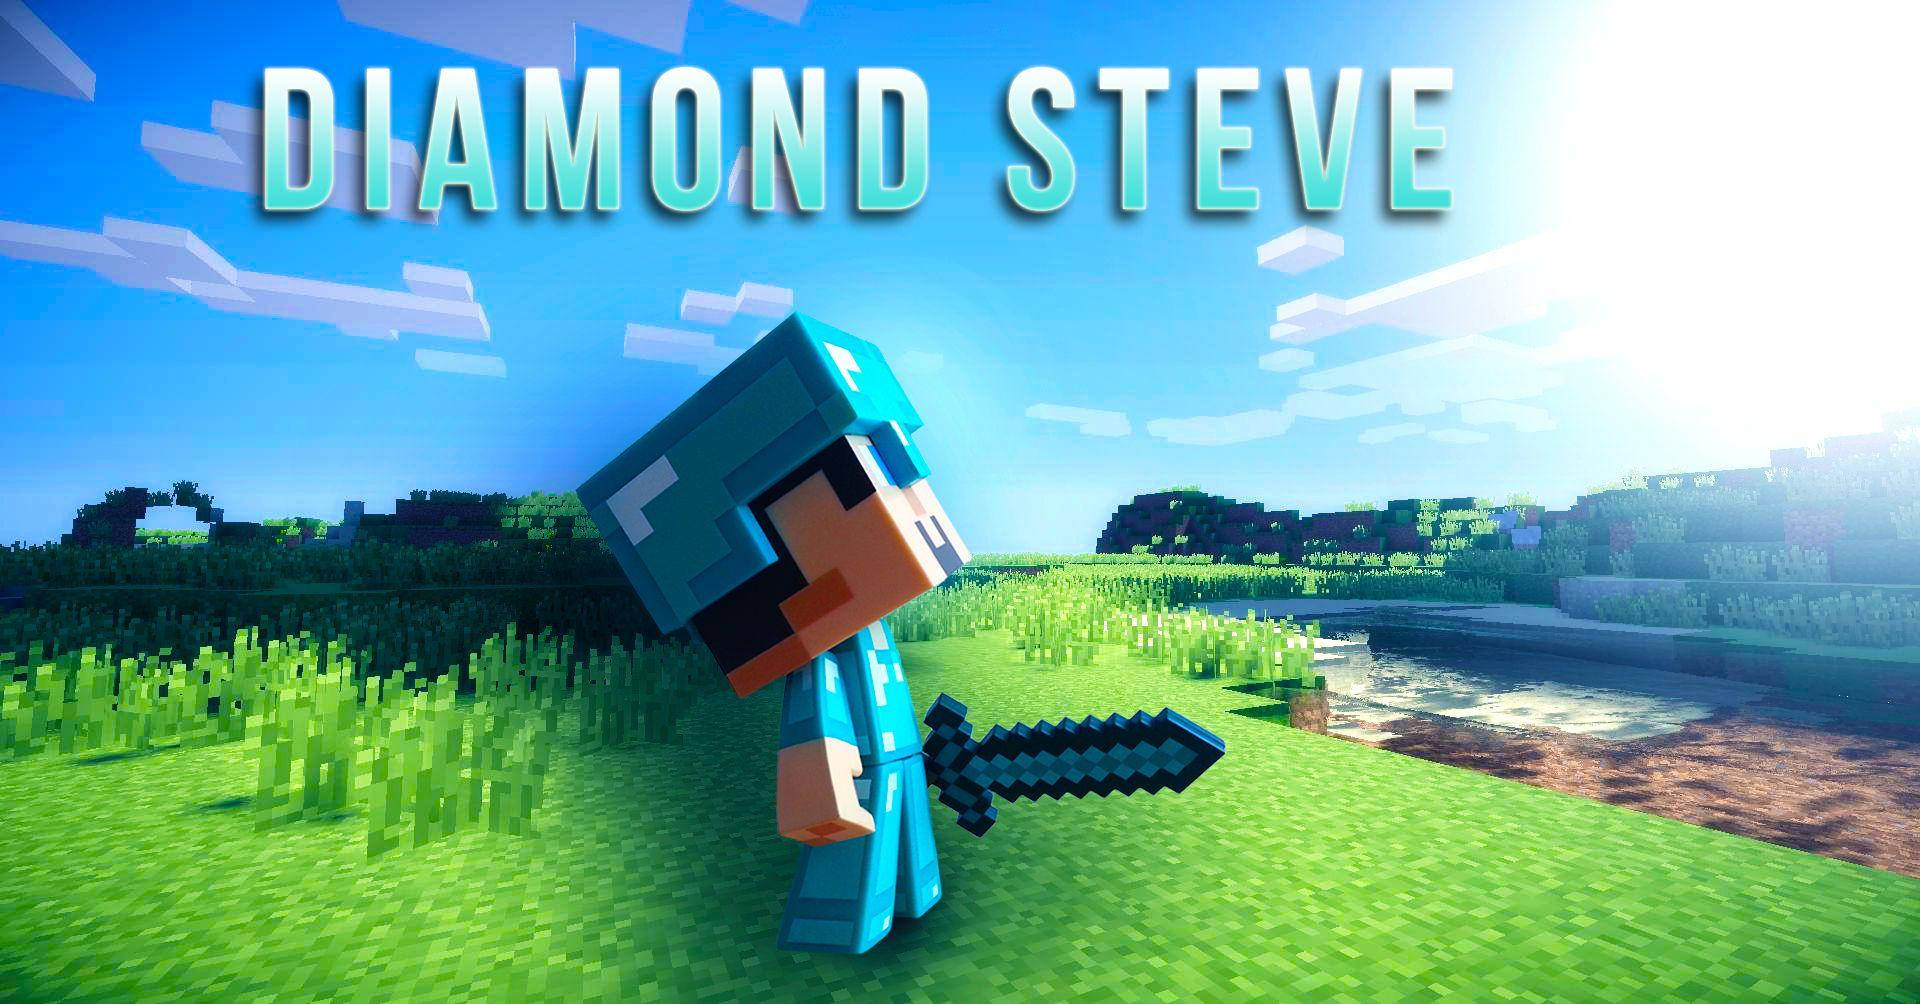 Diamond Steve Cool Minecraft Wallpaper